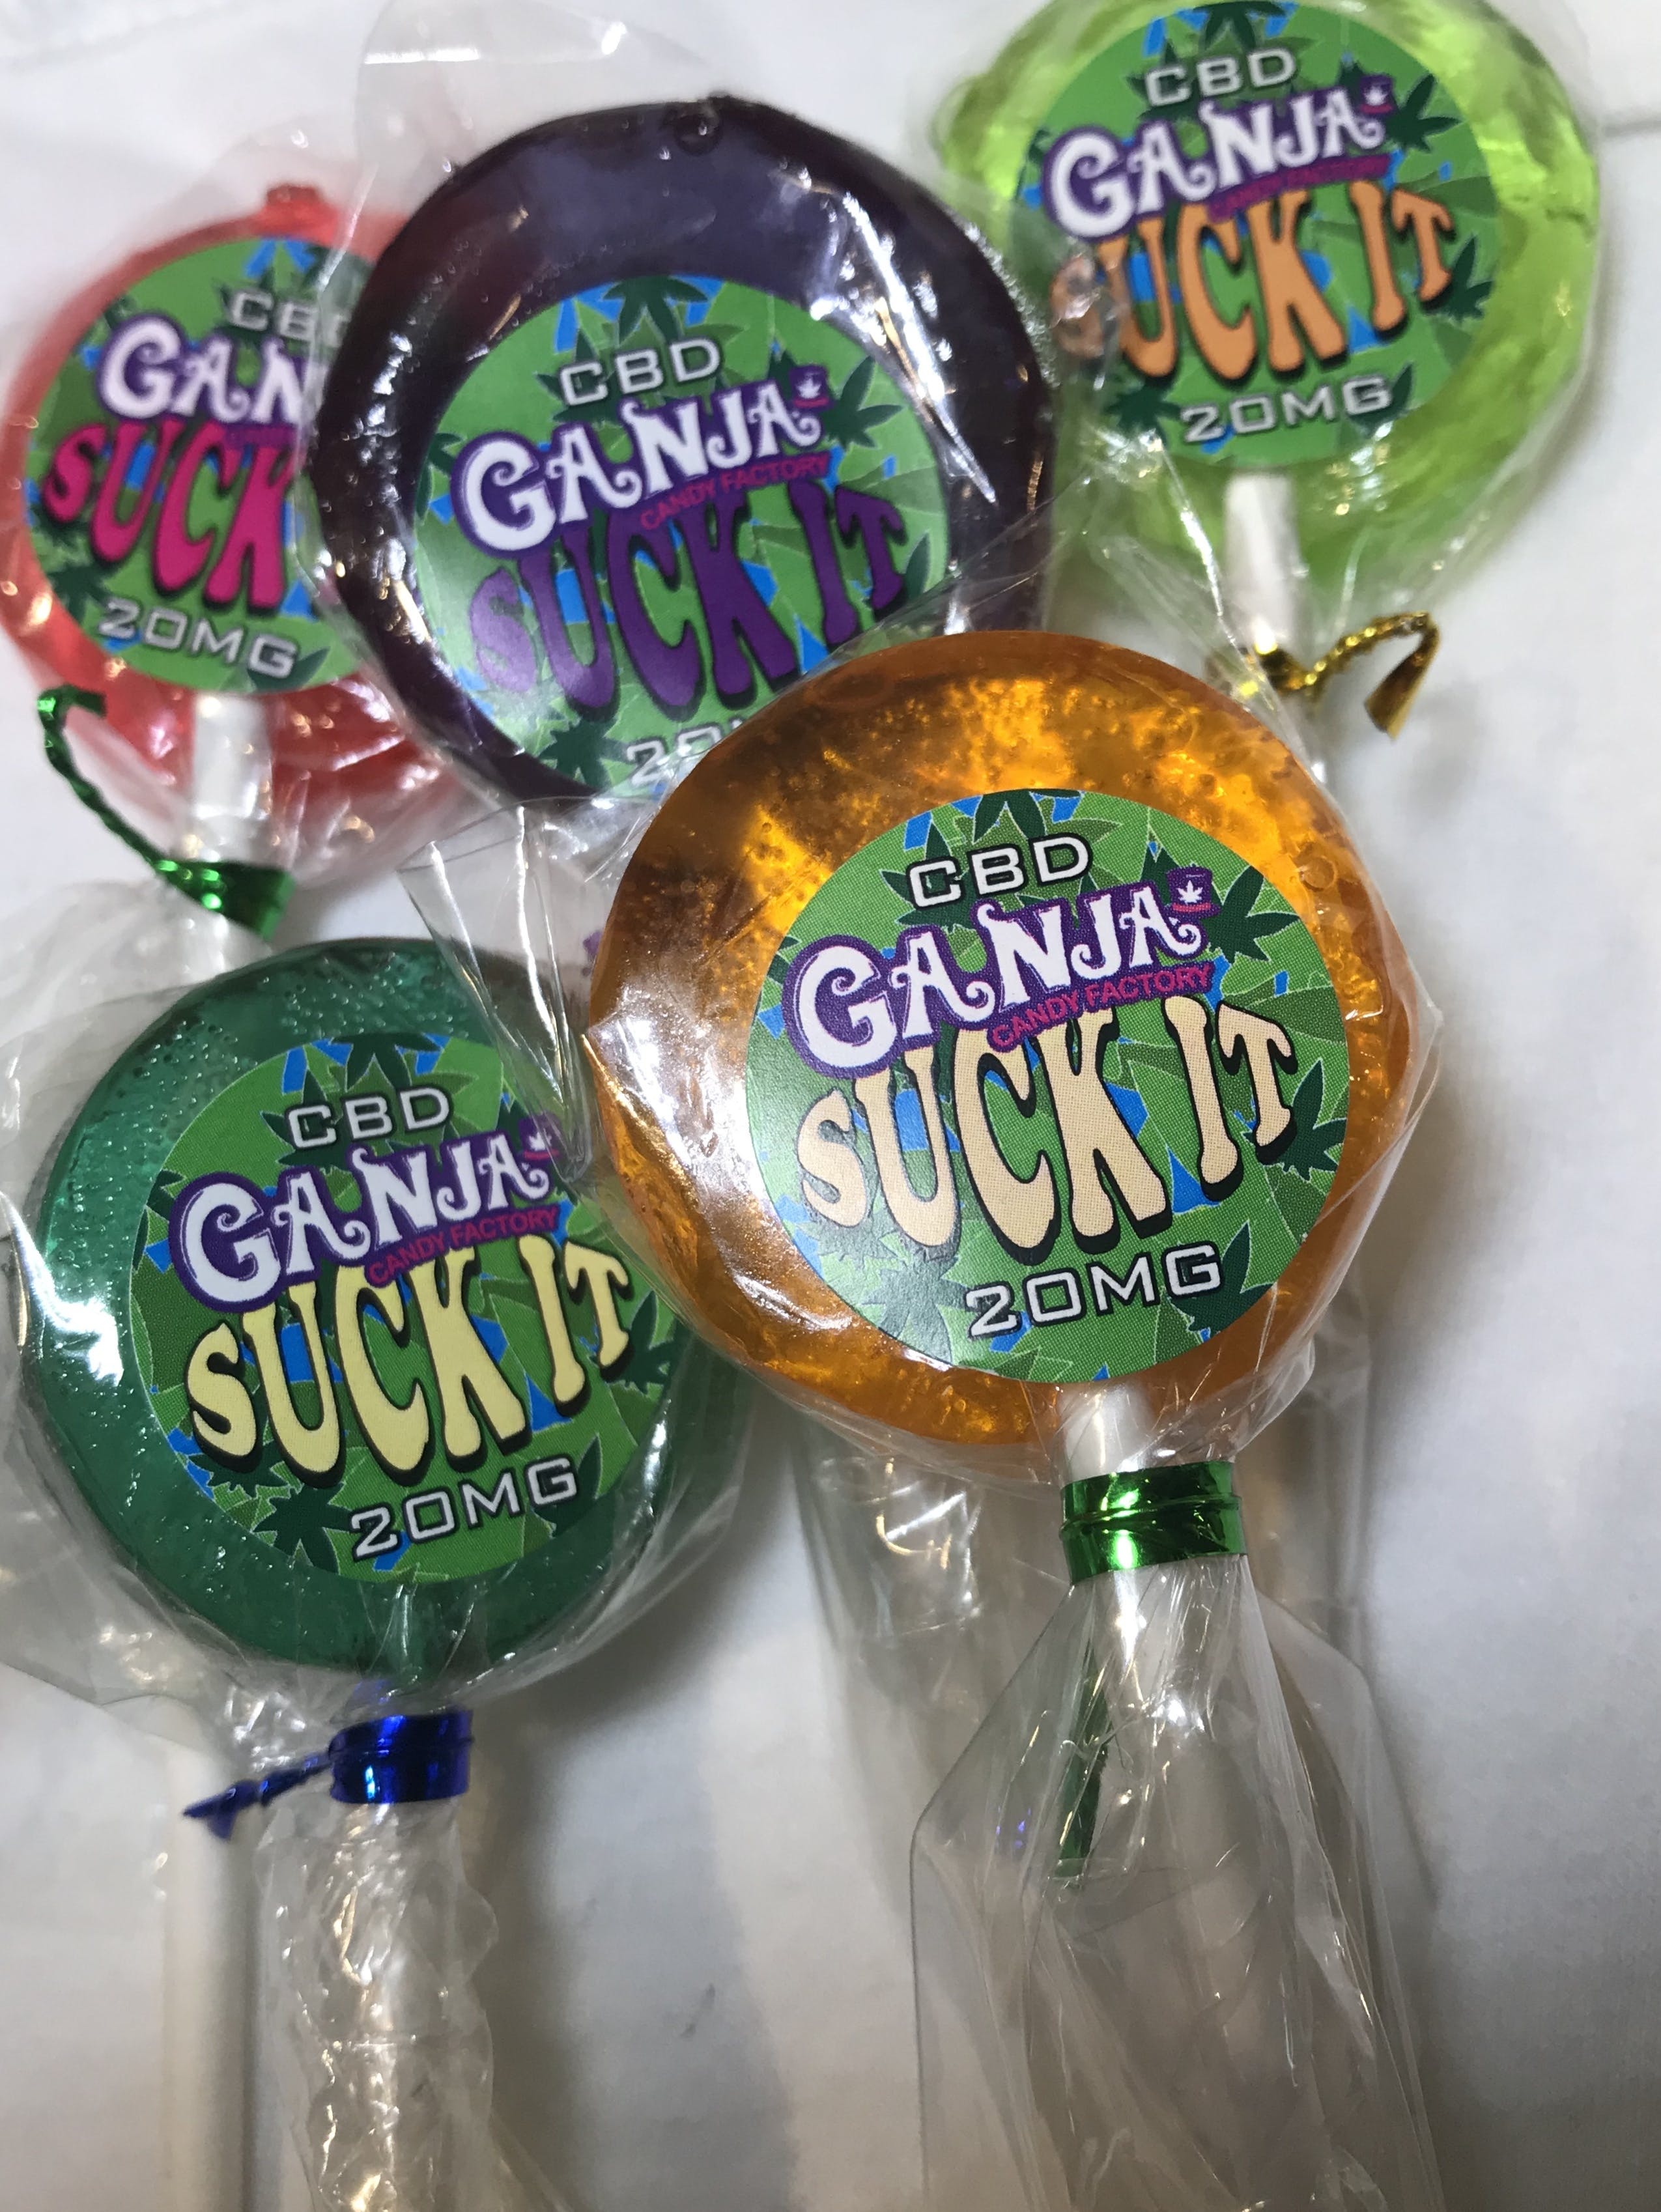 edible-ganja-candy-factory-cbd-only-20mg-lollipops